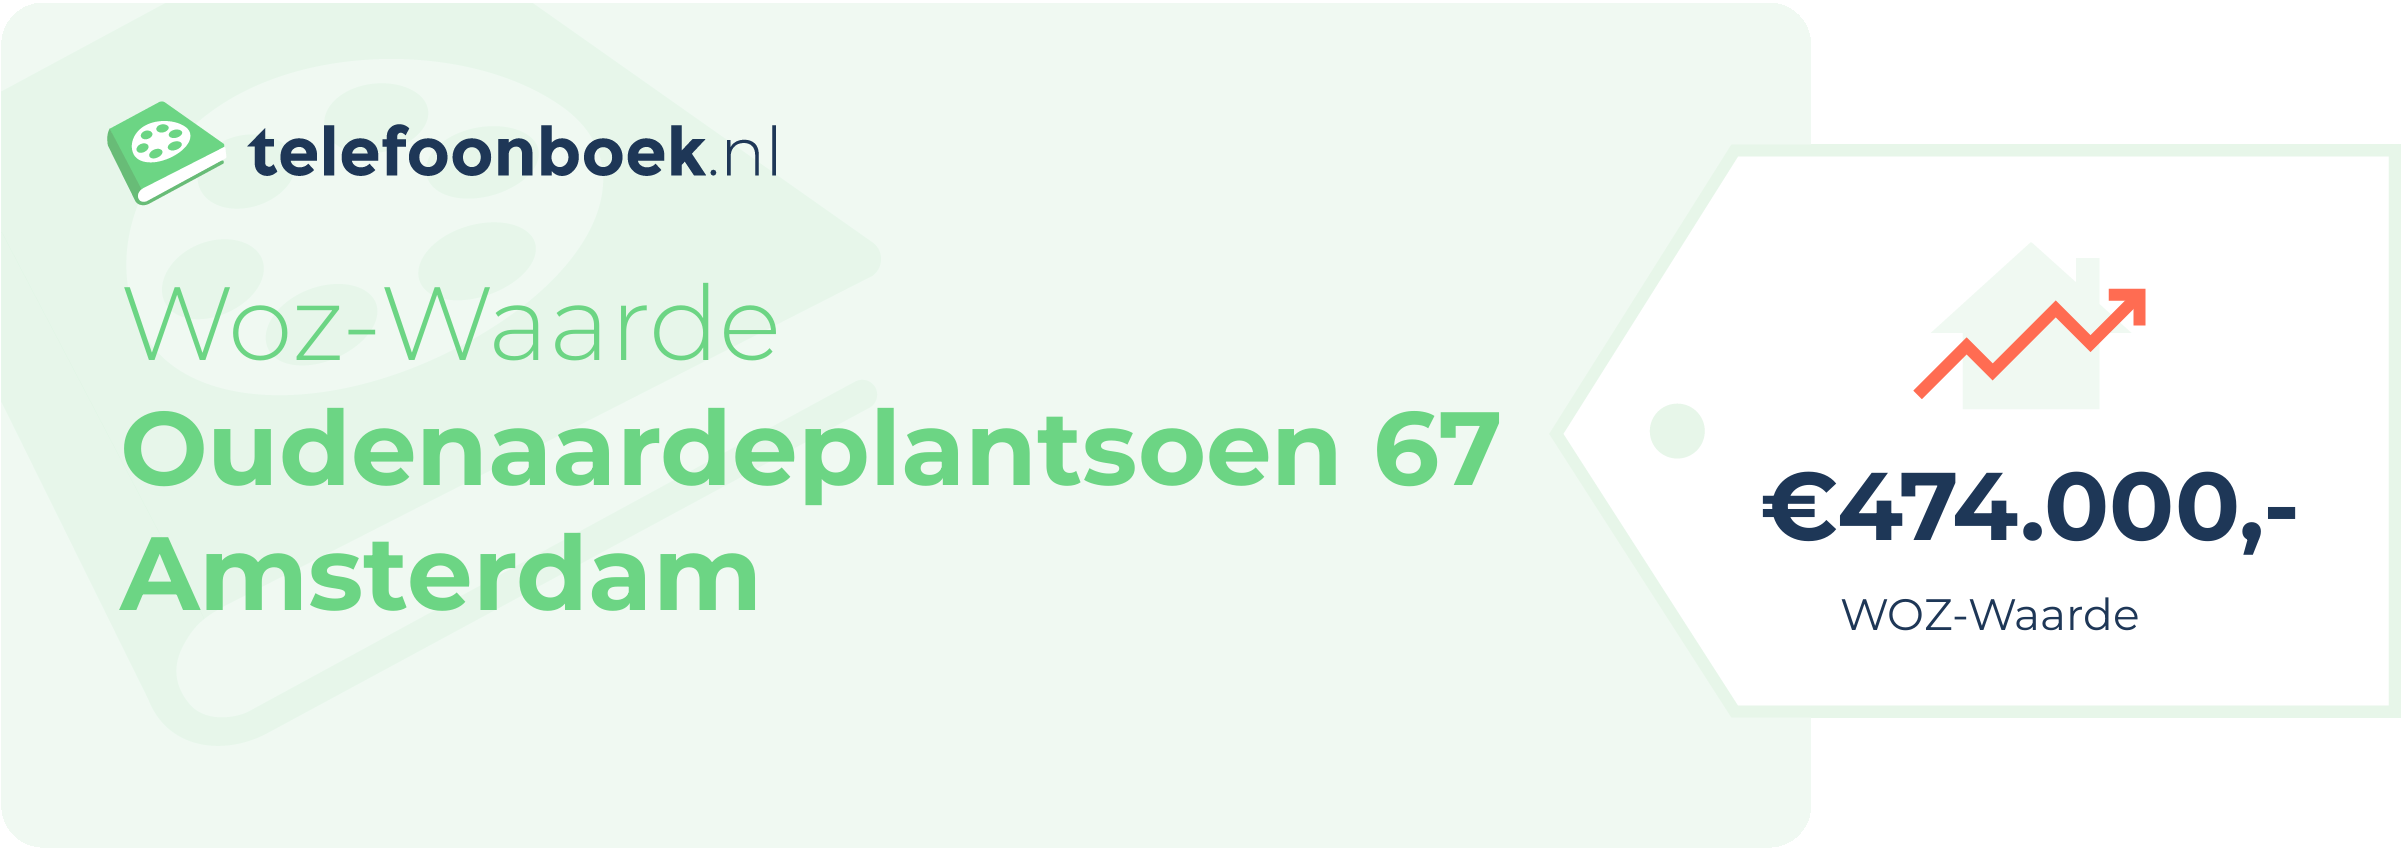 WOZ-waarde Oudenaardeplantsoen 67 Amsterdam